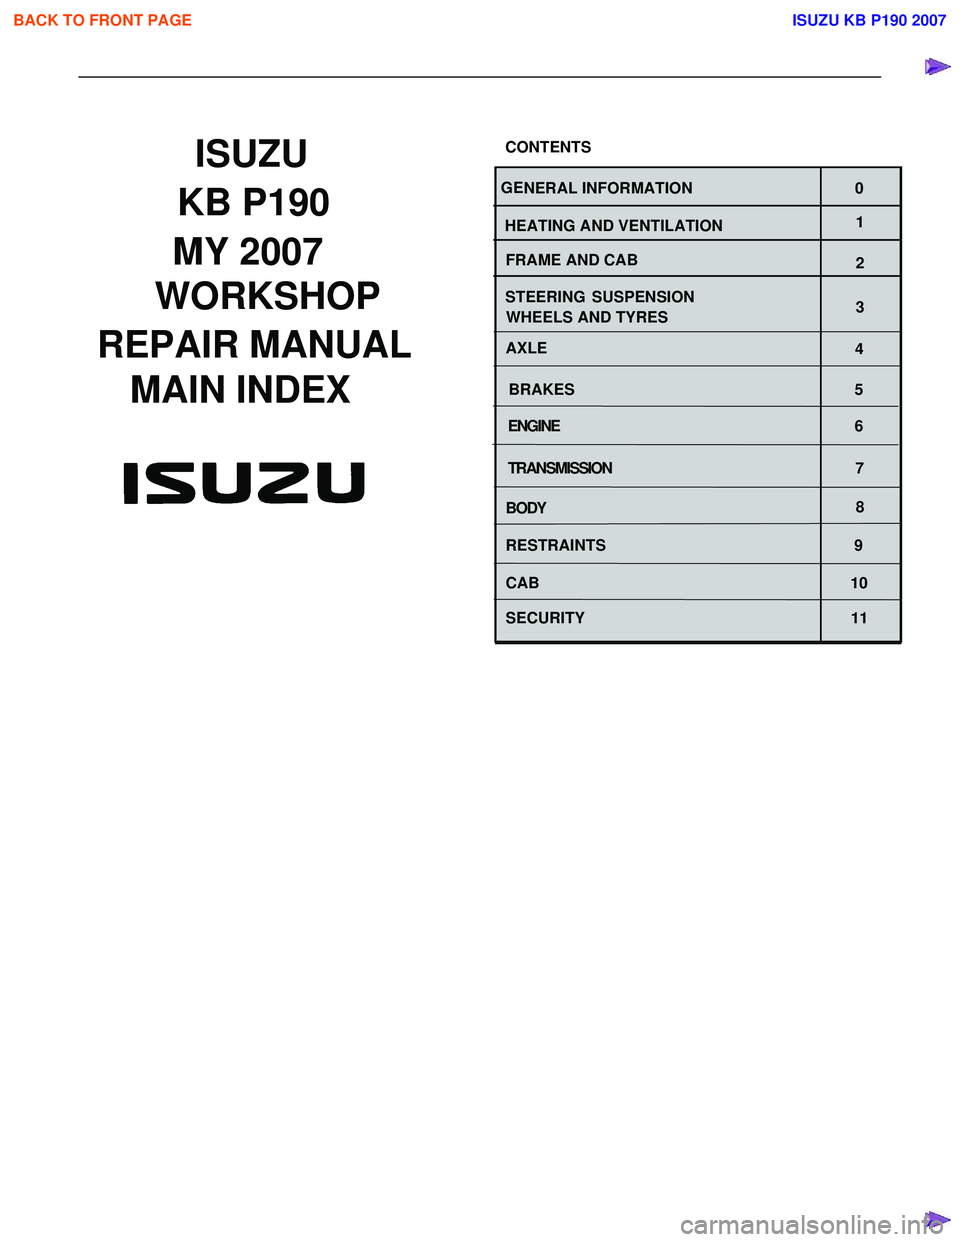 ISUZU KB P190 2007  Workshop Repair Manual 1
 
WORKSHOP
REPAIR MANUAL
GE NERAL INFORMATION                                  0
 HEATING AND VENTILATION
BRAKESMAIN INDEX ISUZU
 
CONTENTS
WHEELS AND TYRES                                          